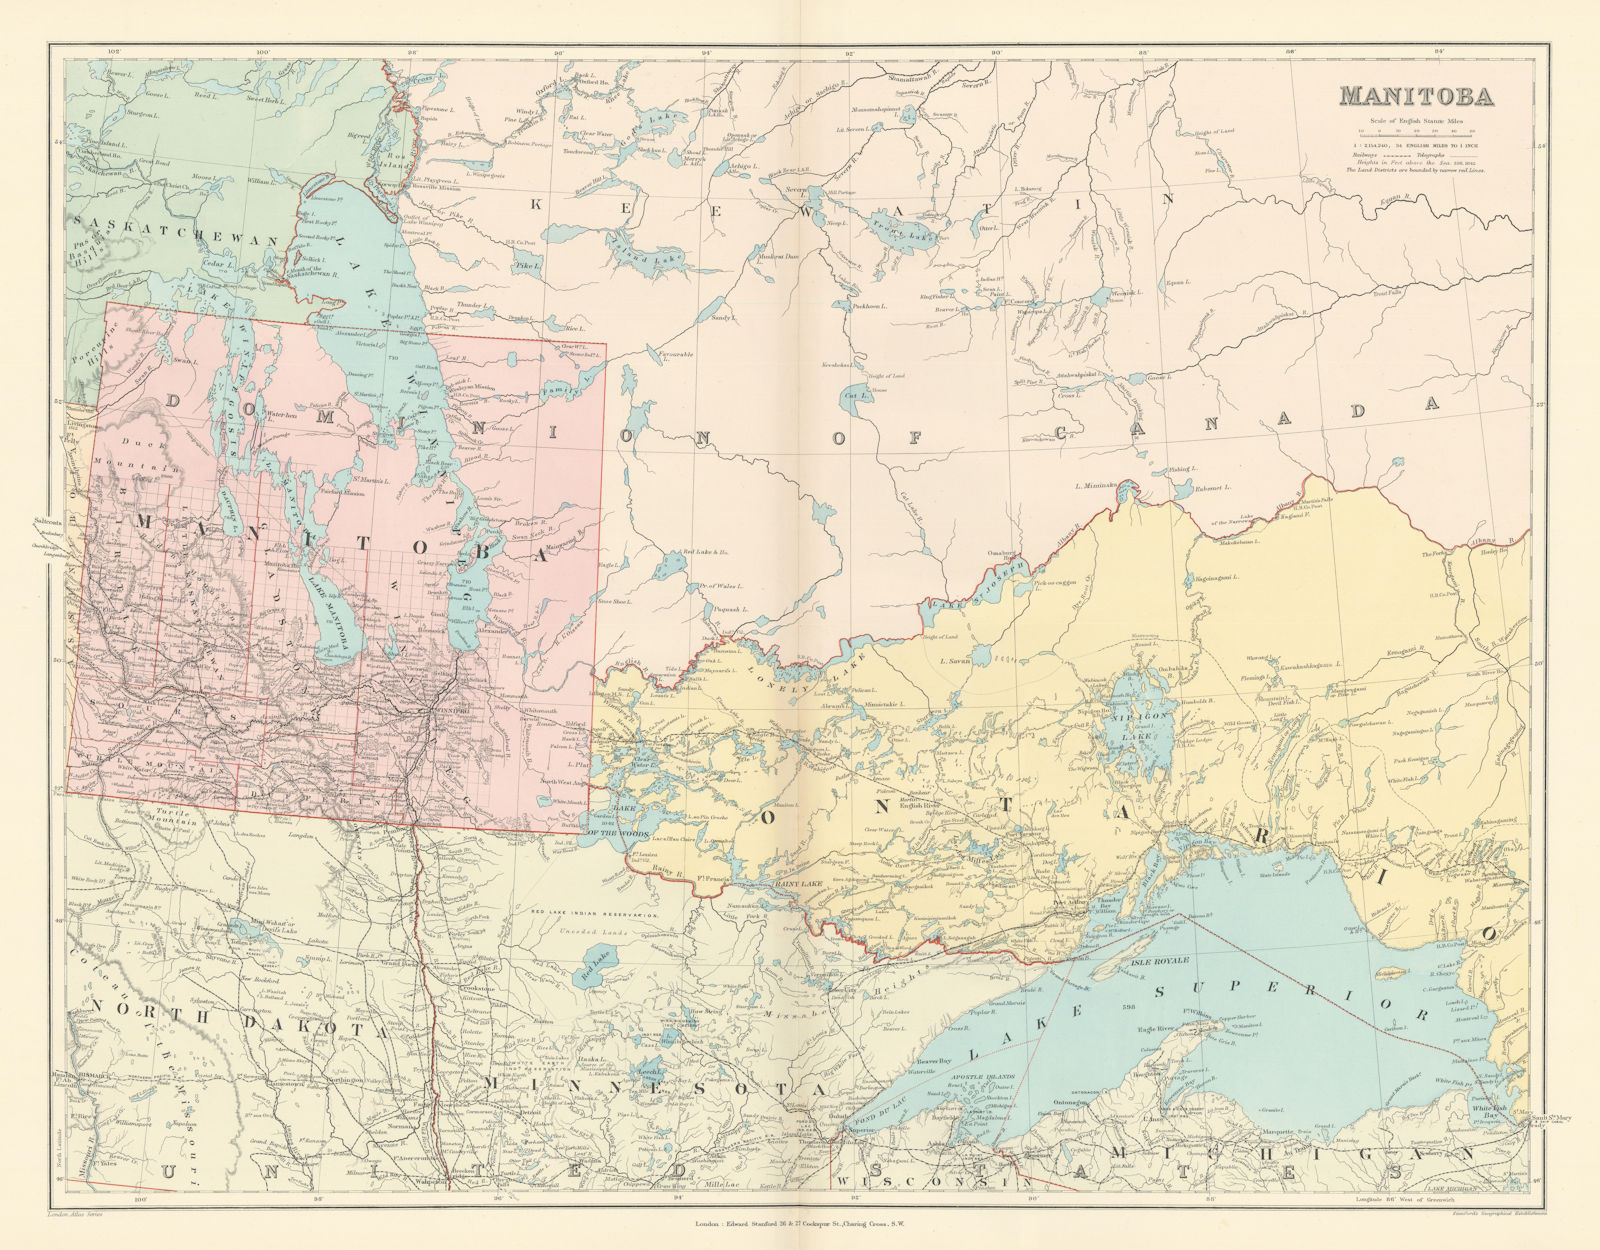 Manitoba. West Ontario, Lake Superior & Winnipeg. Canada. STANFORD 1896 map